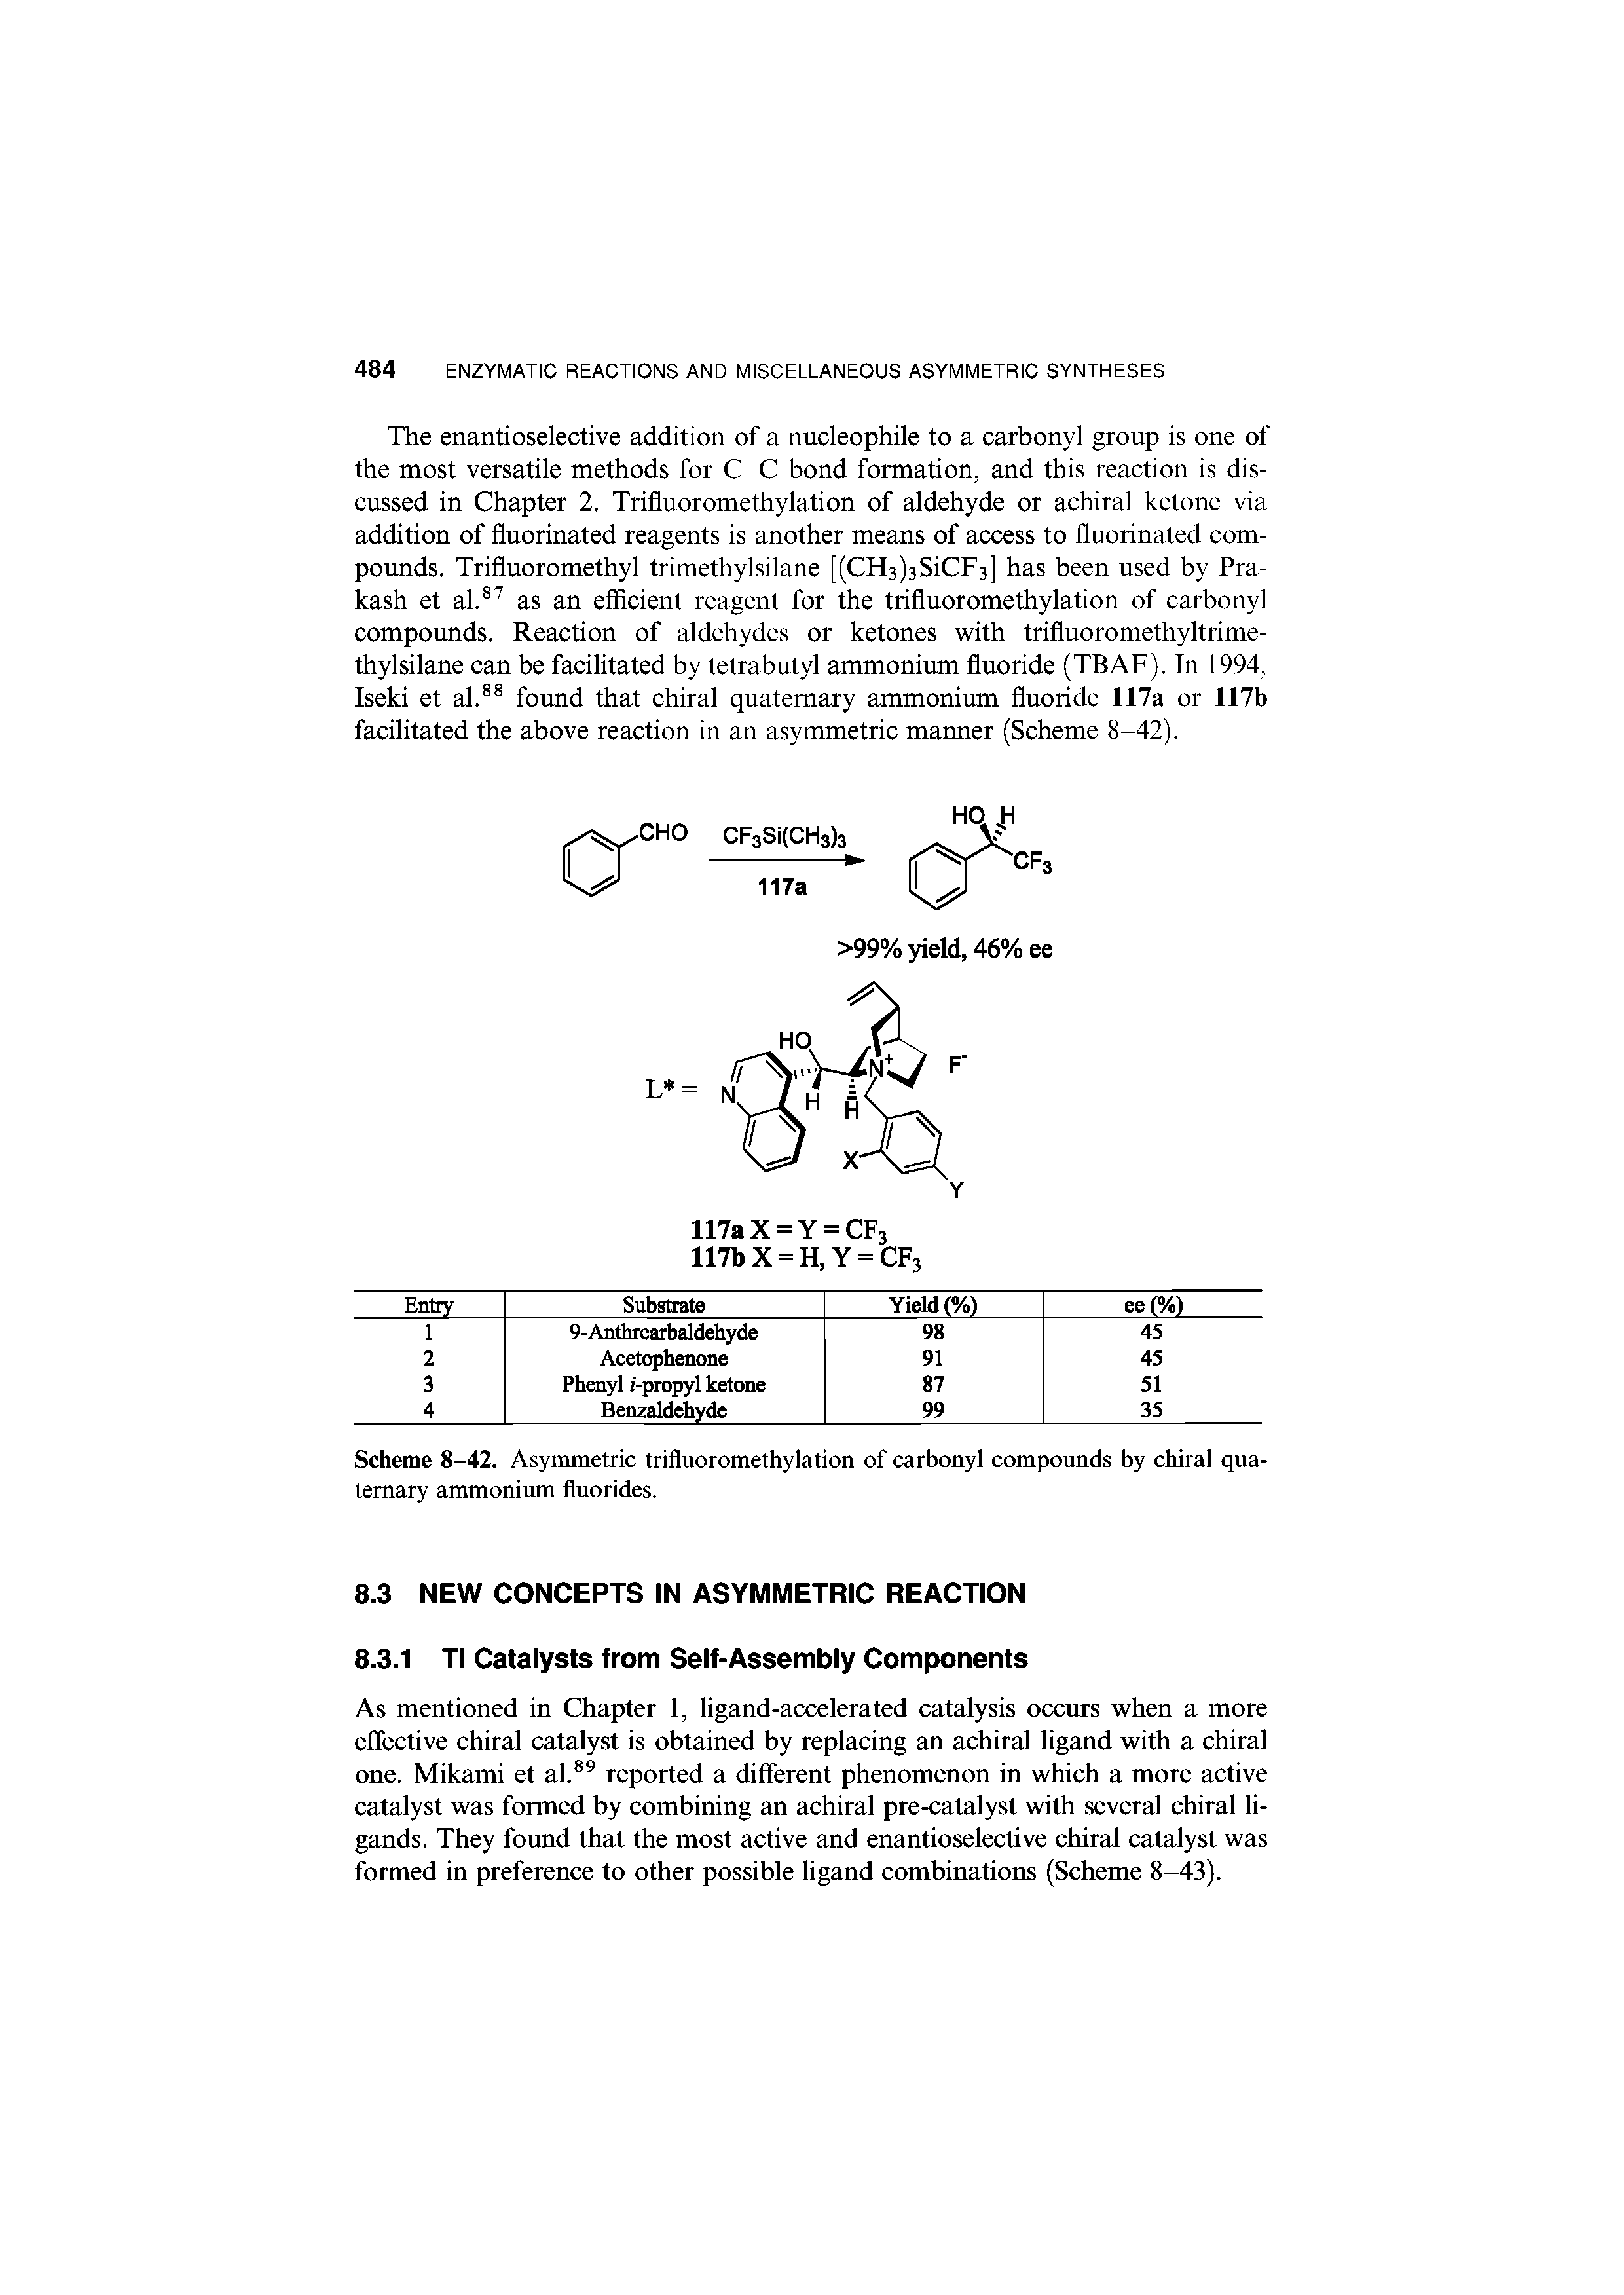 Scheme 8-42. Asymmetric trifluoromethylation of carbonyl compounds by chiral quaternary ammonium fluorides.